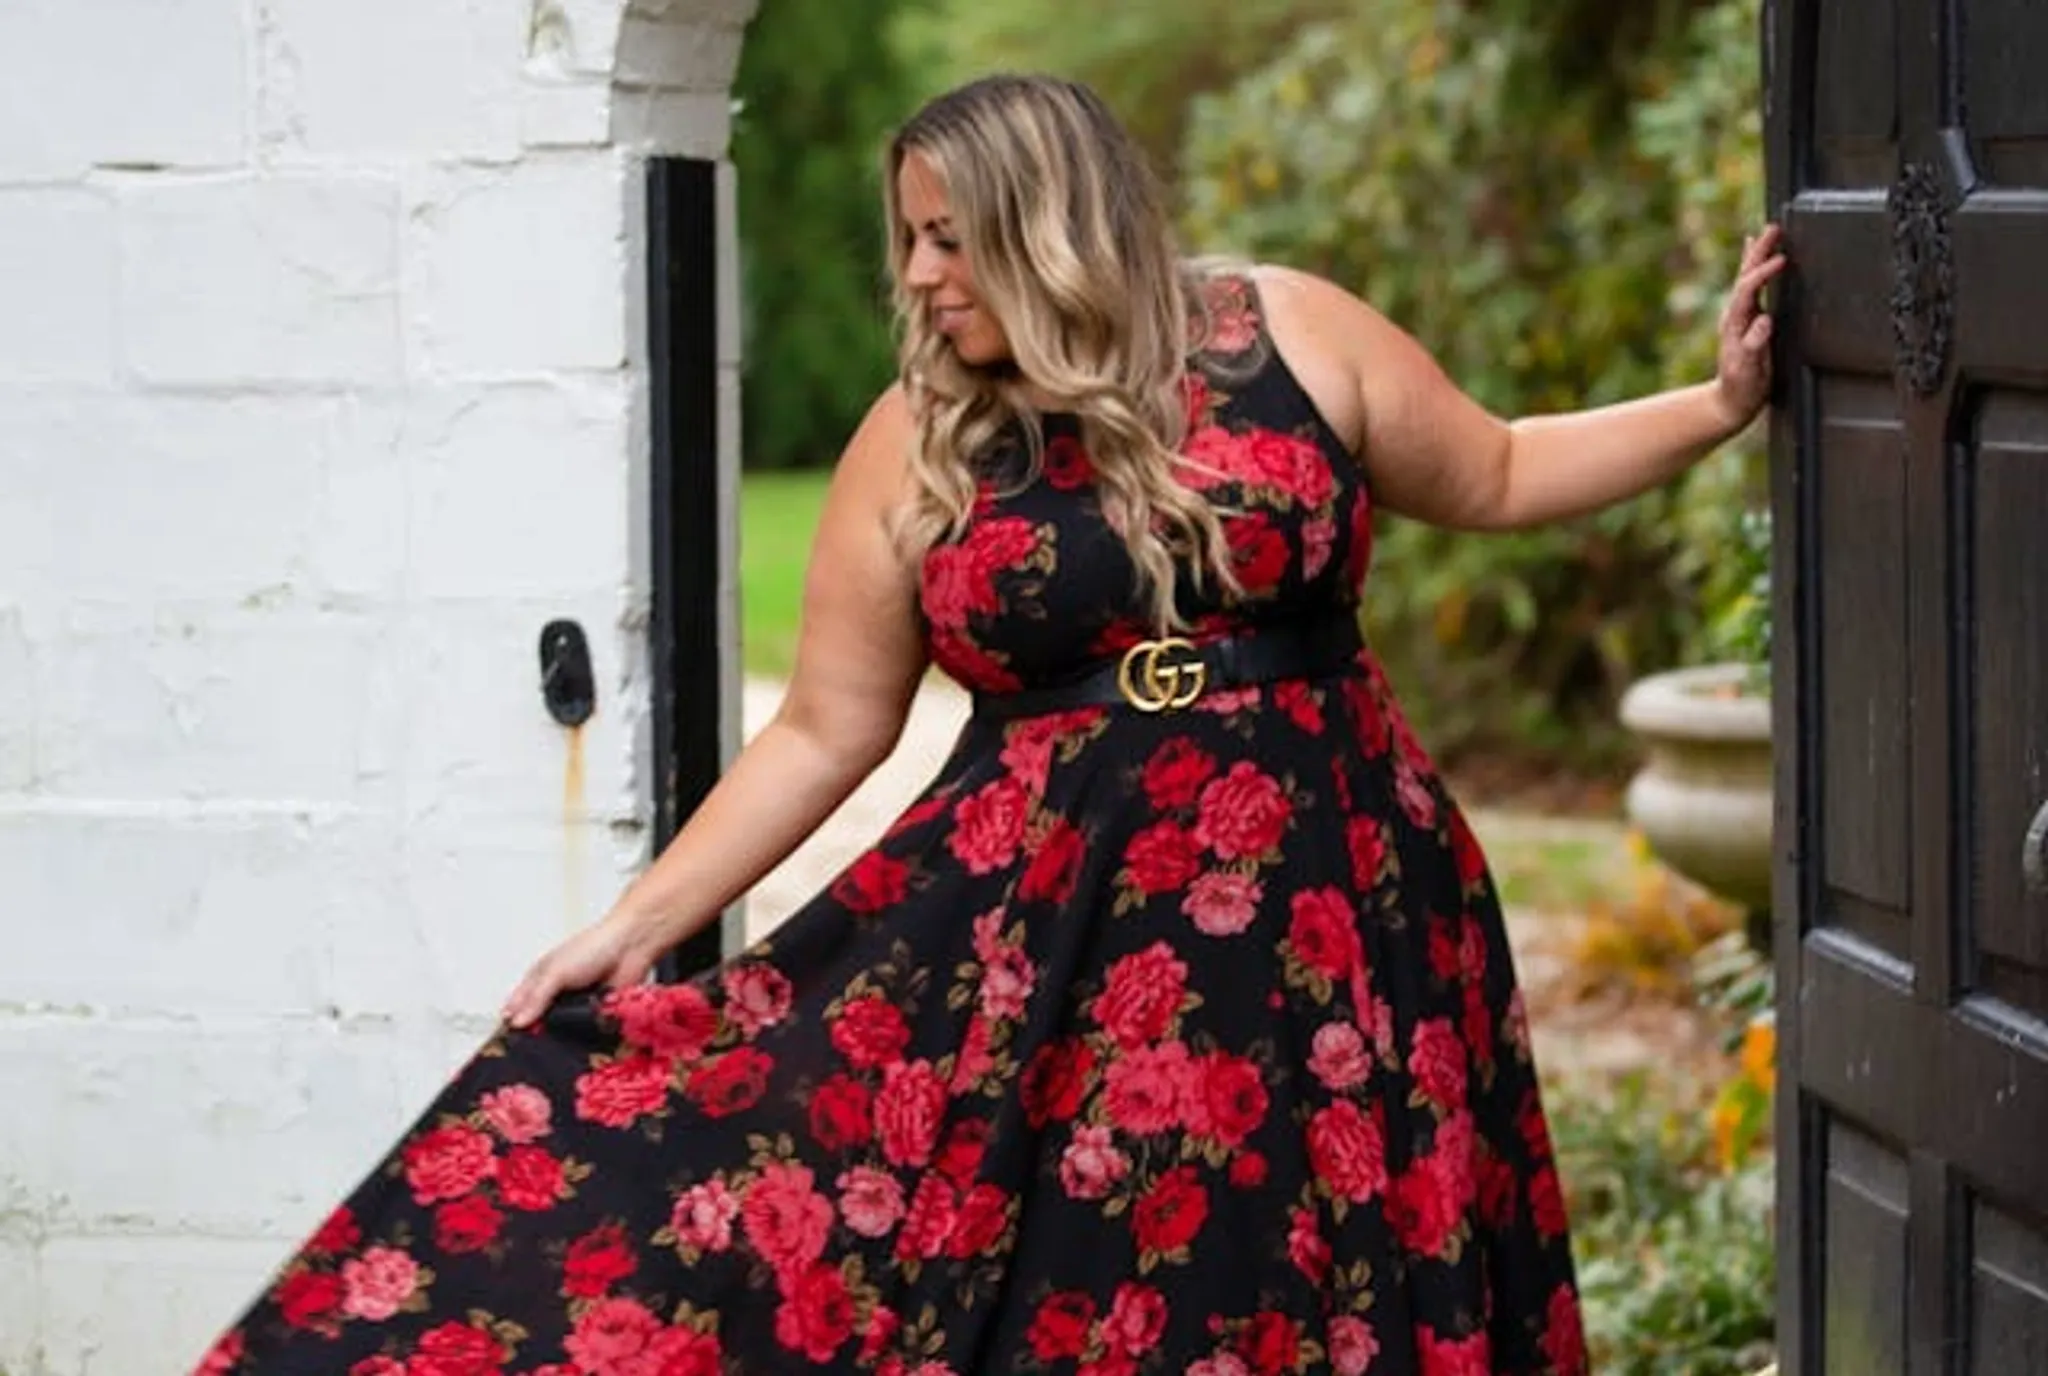 A plus-size woman with loud patterns dress